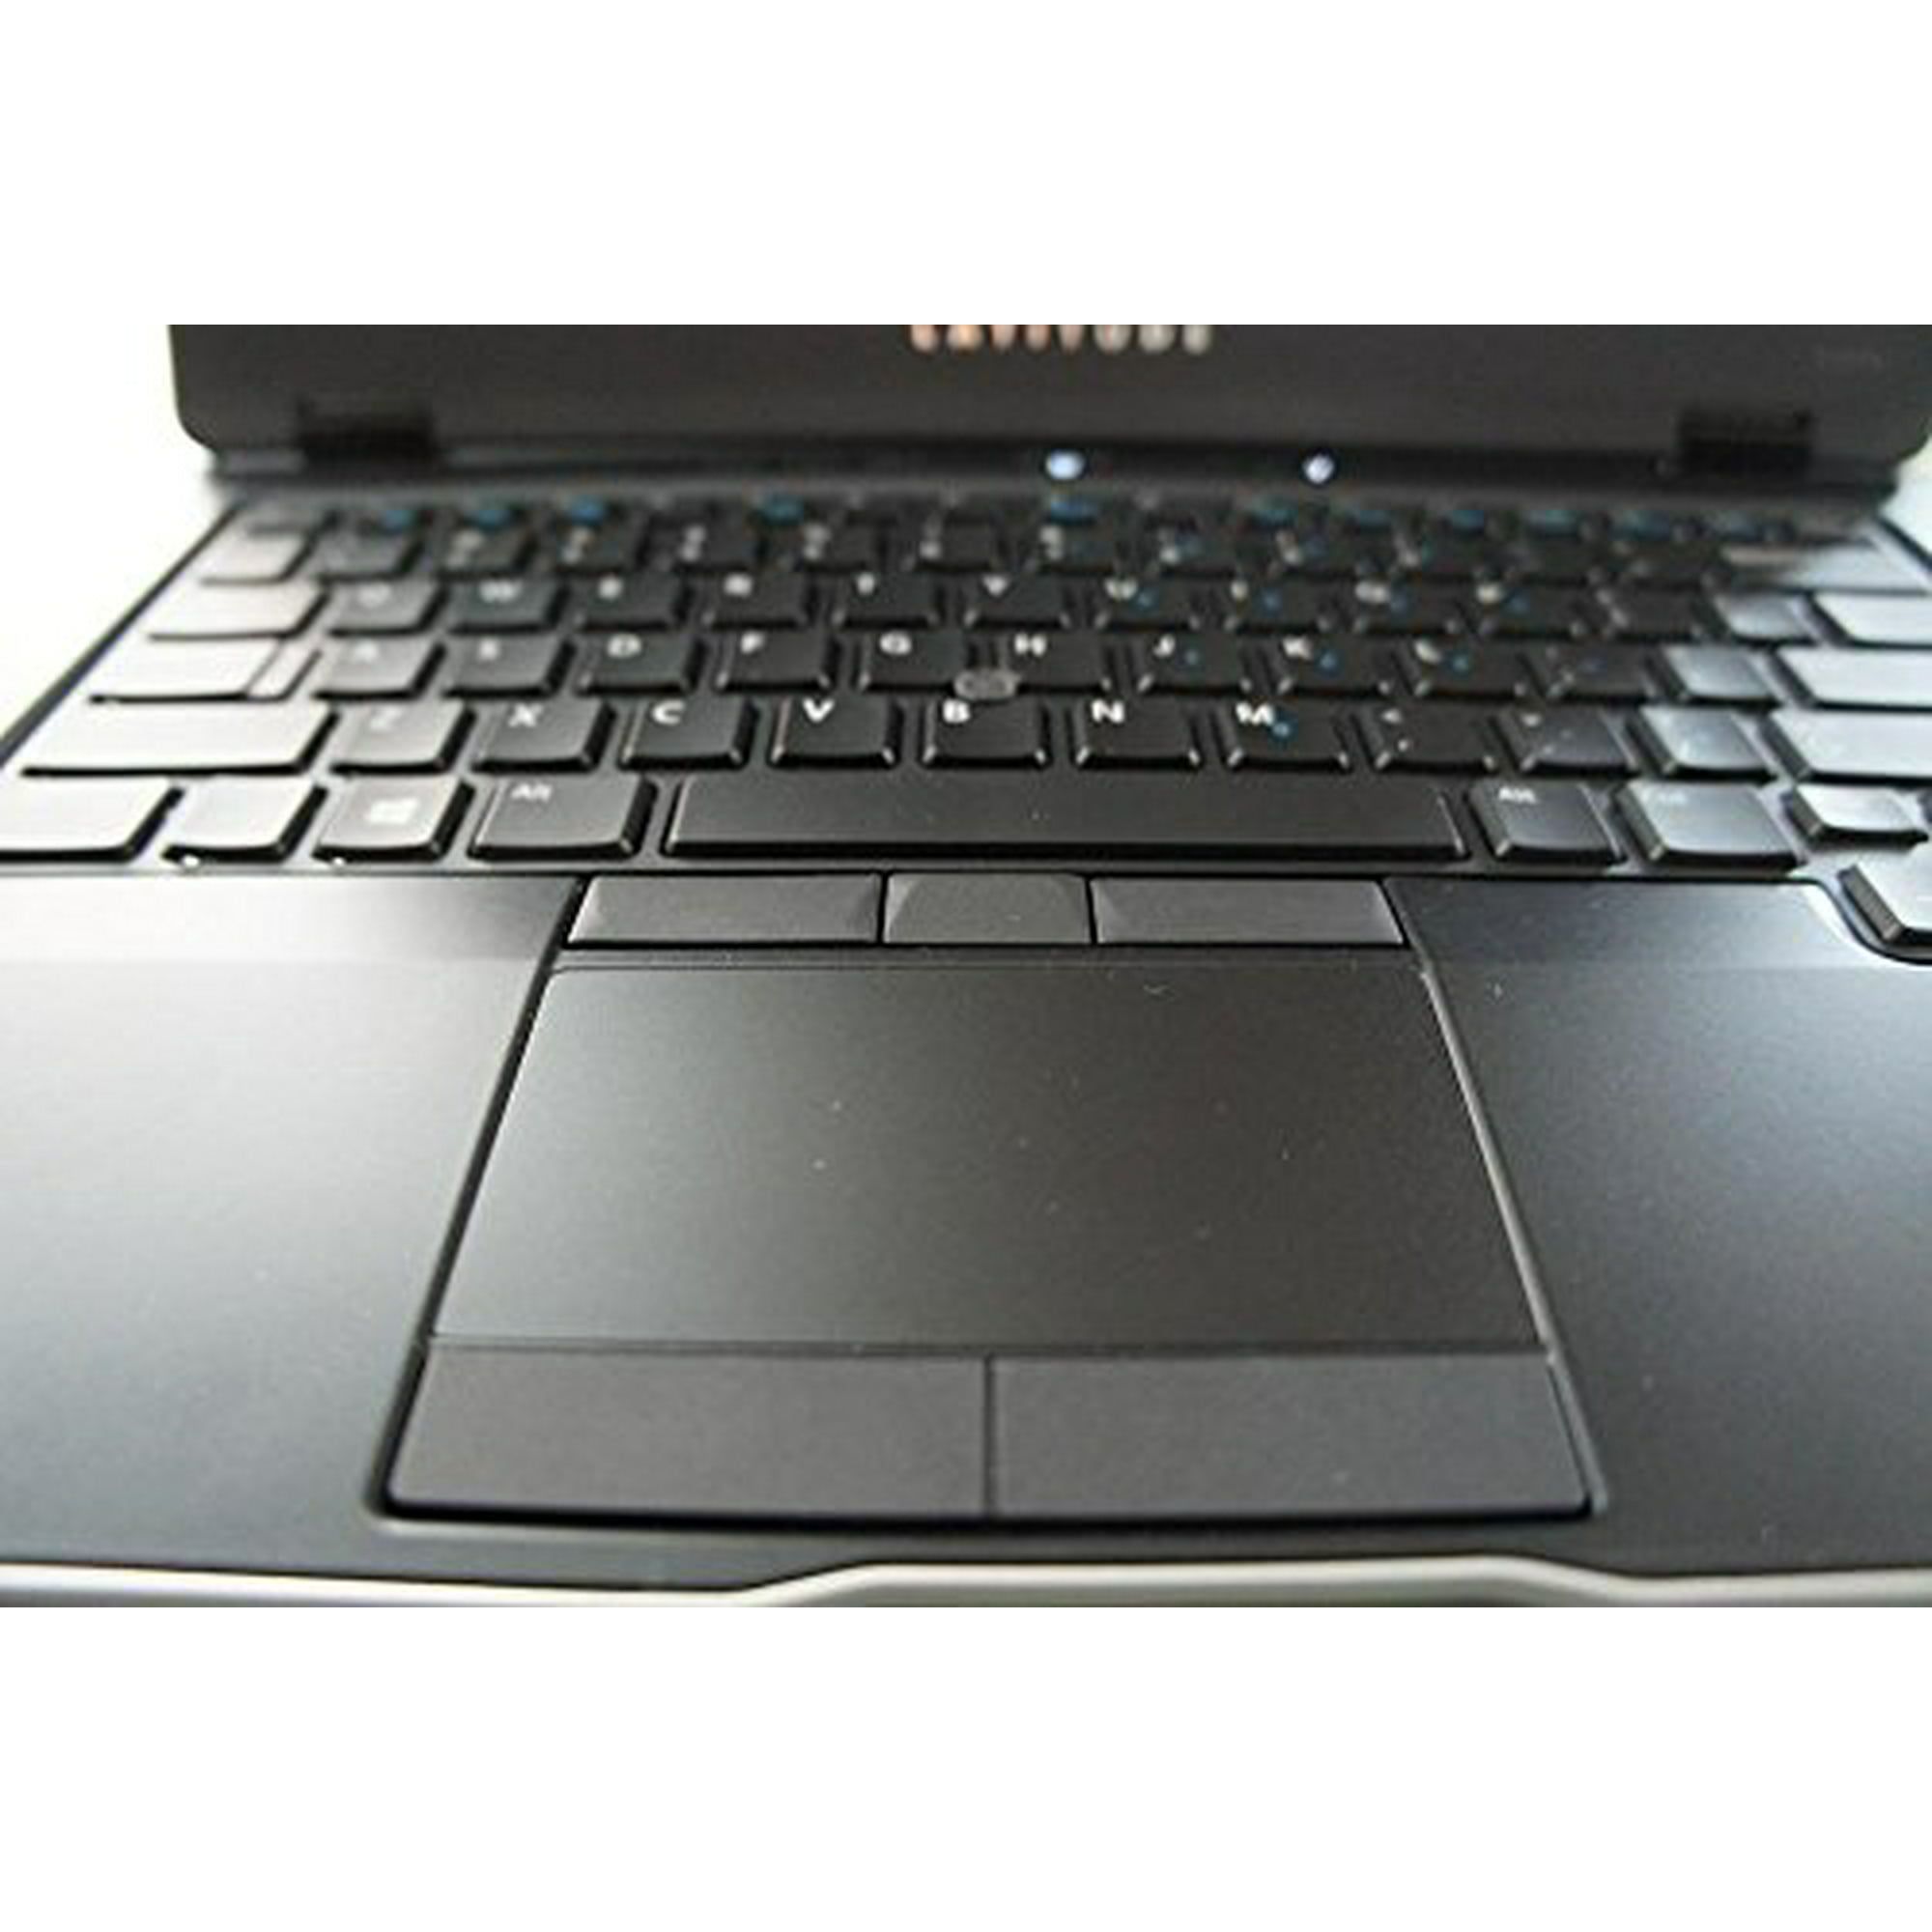 LaptopKing Replacement Keyboard for Dell Latitude 6430U E6430U Series Laptop Black US Layout 1 Year Warranty